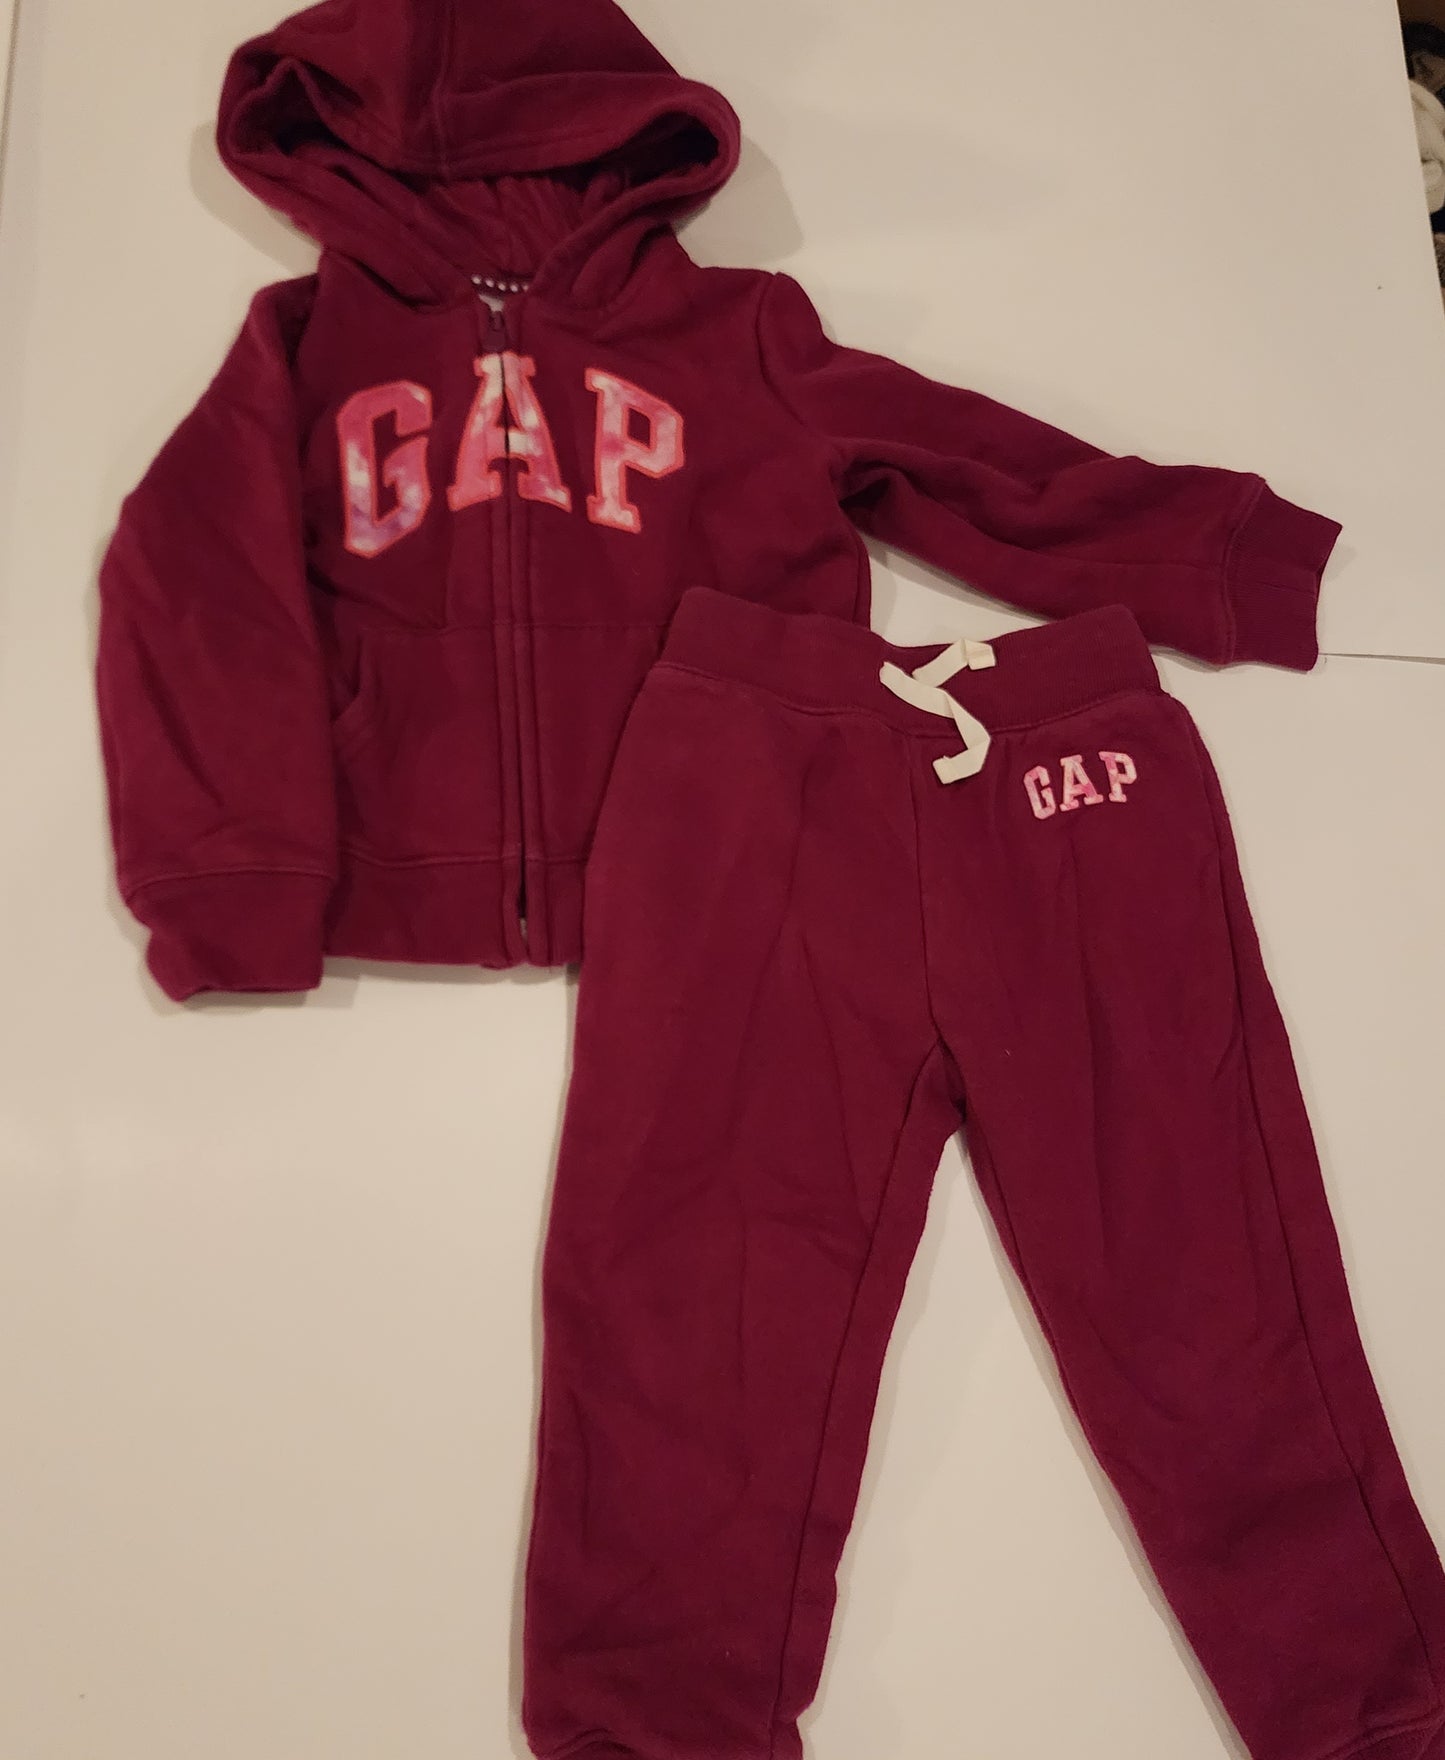 Girls 3 Gap zip hoodie sweatsuit